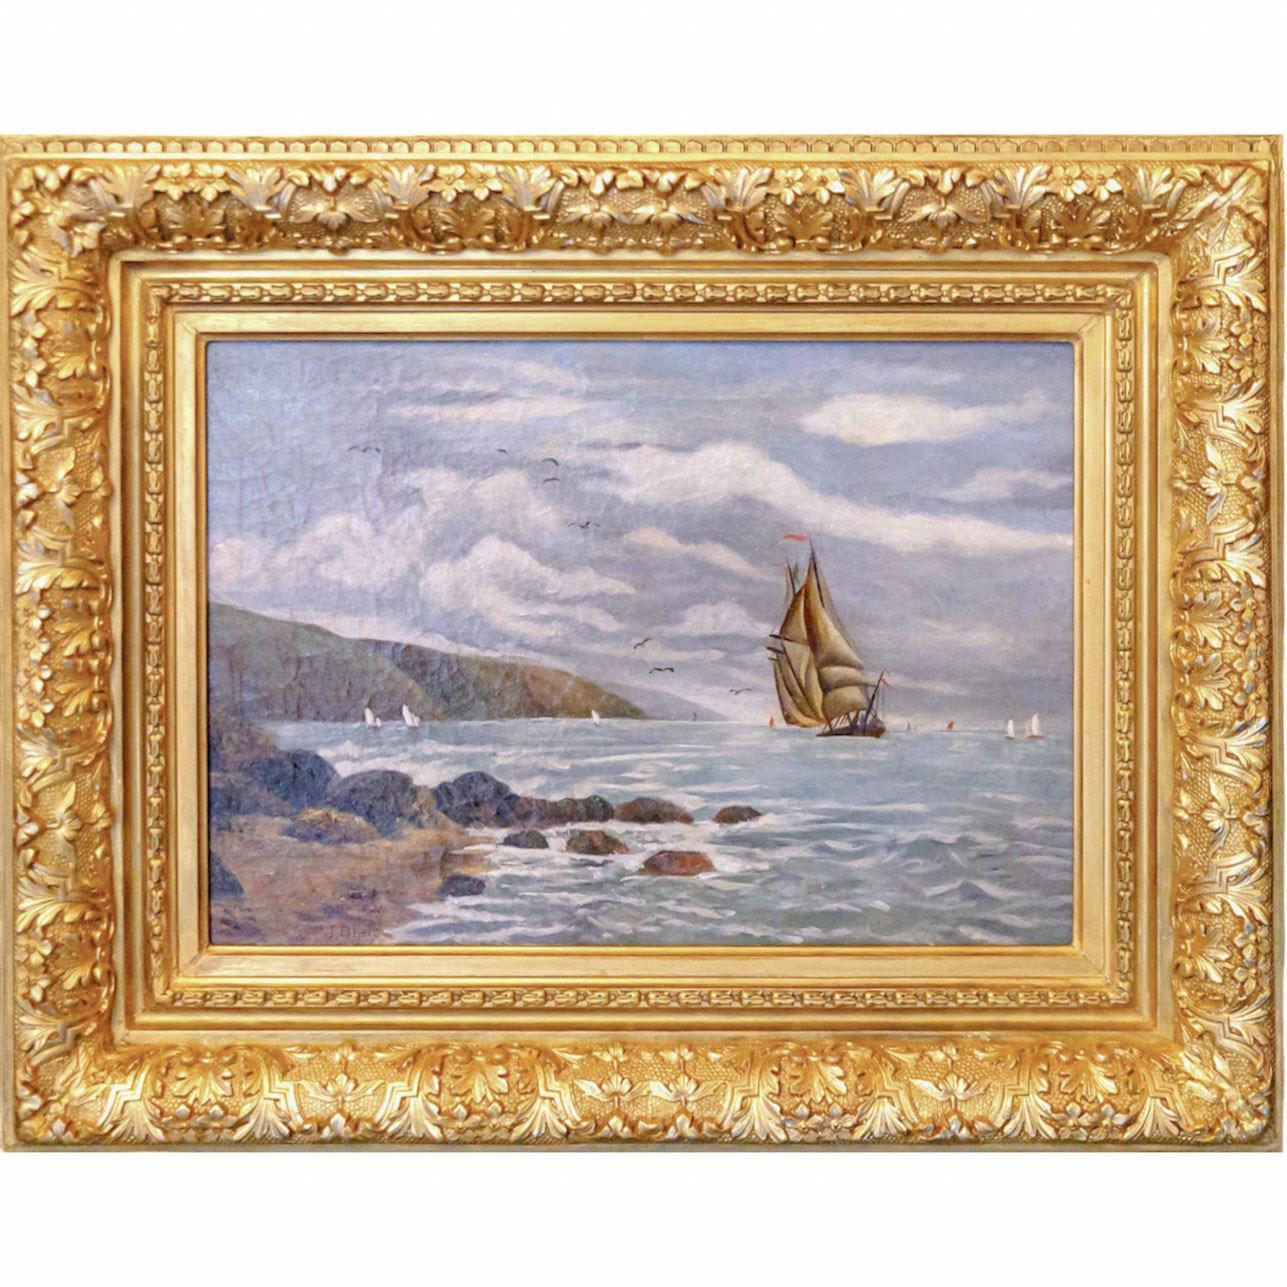 John Brett Landscape Painting - Seafaring Tranquility: A Pre-Raphaelite Scene Oil Painting on Canvas, Signed